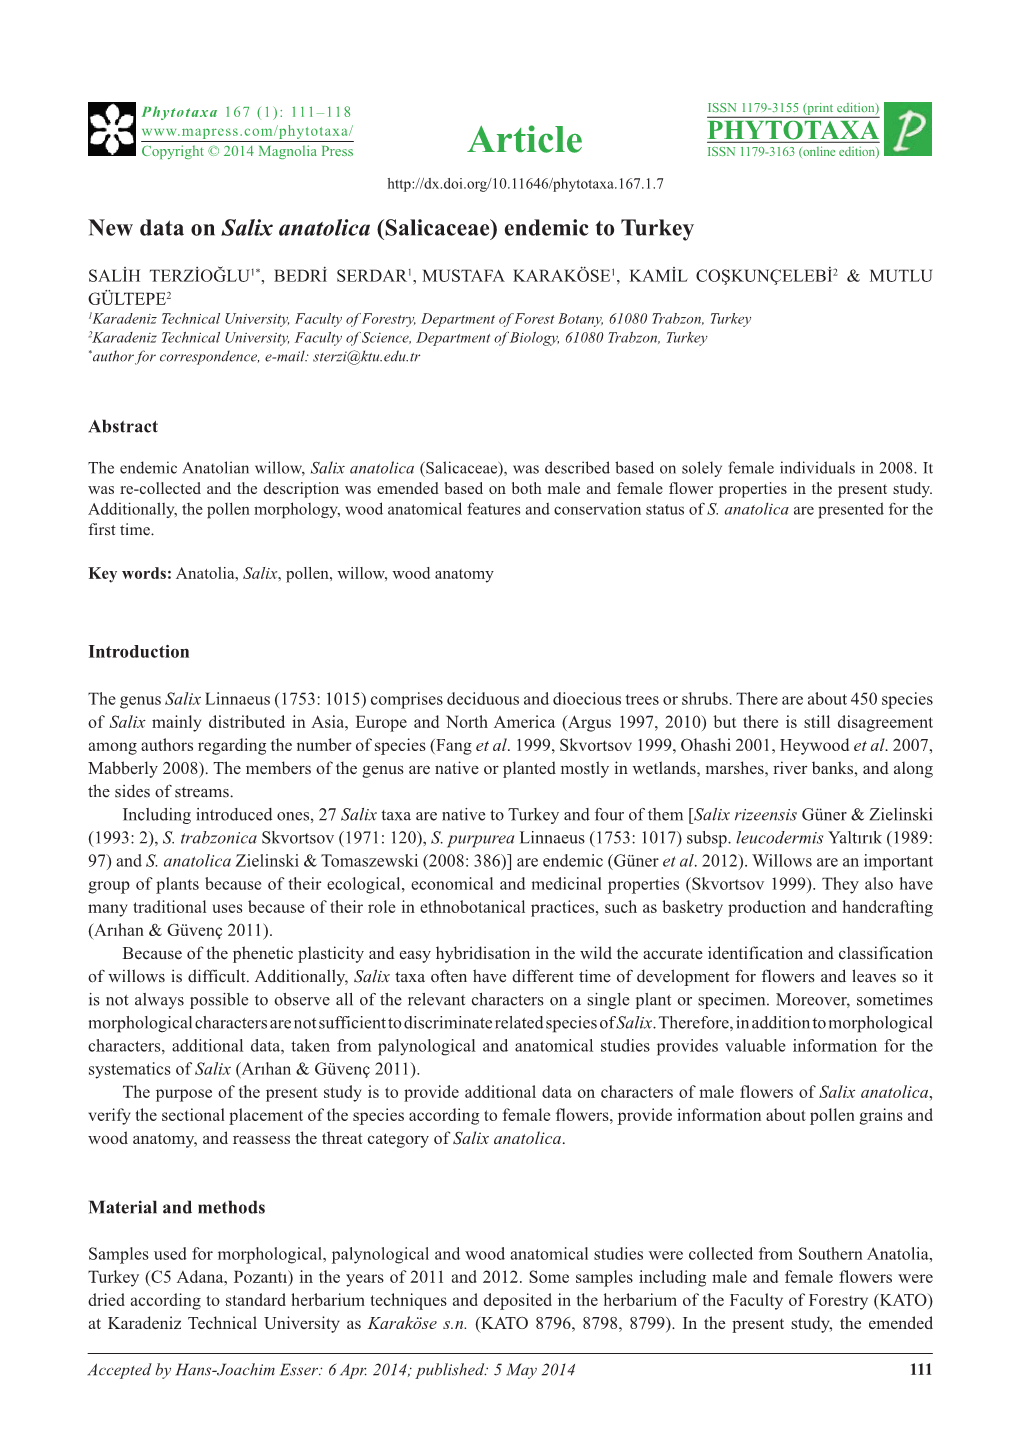 New Data on Salix Anatolica (Salicaceae) Endemic to Turkey